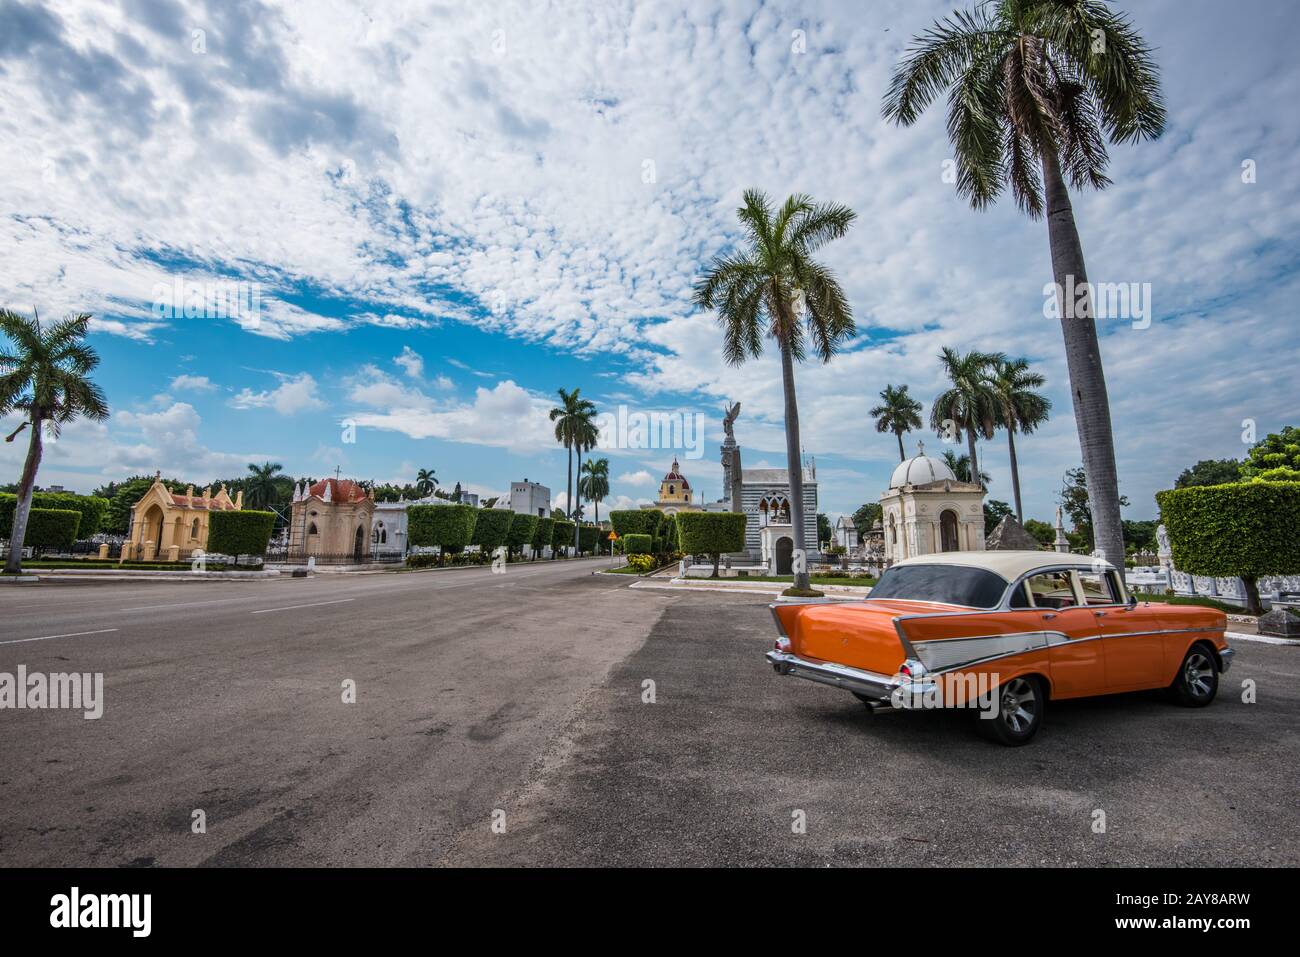 The Colon Cemetery in Havana Cuba. Stock Photo